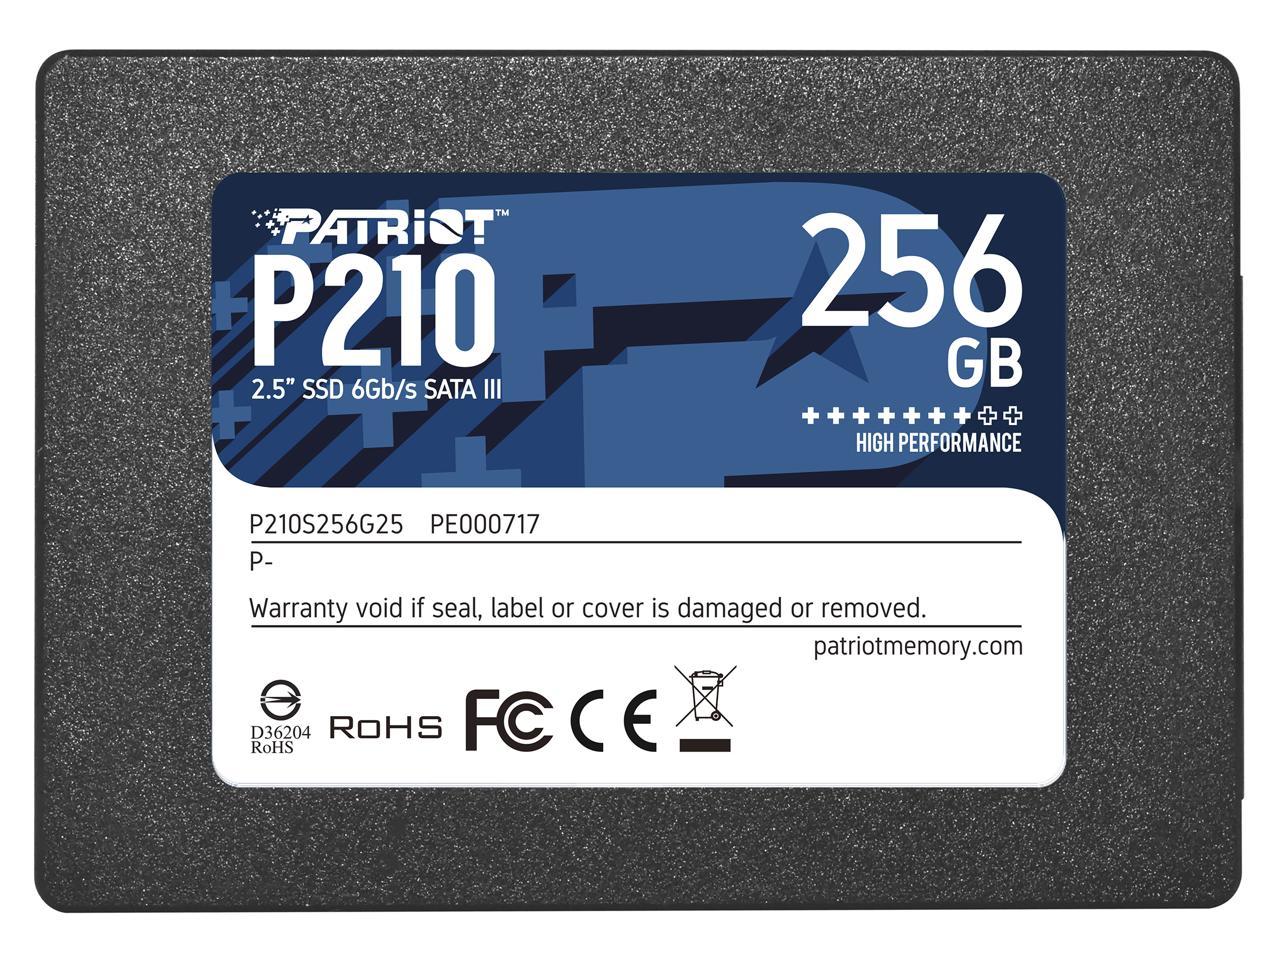 Lying Emulate violent Patriot P210 2.5" 256GB SATA III Internal Solid State Drive (SSD)  P210S256G25 - Newegg.com